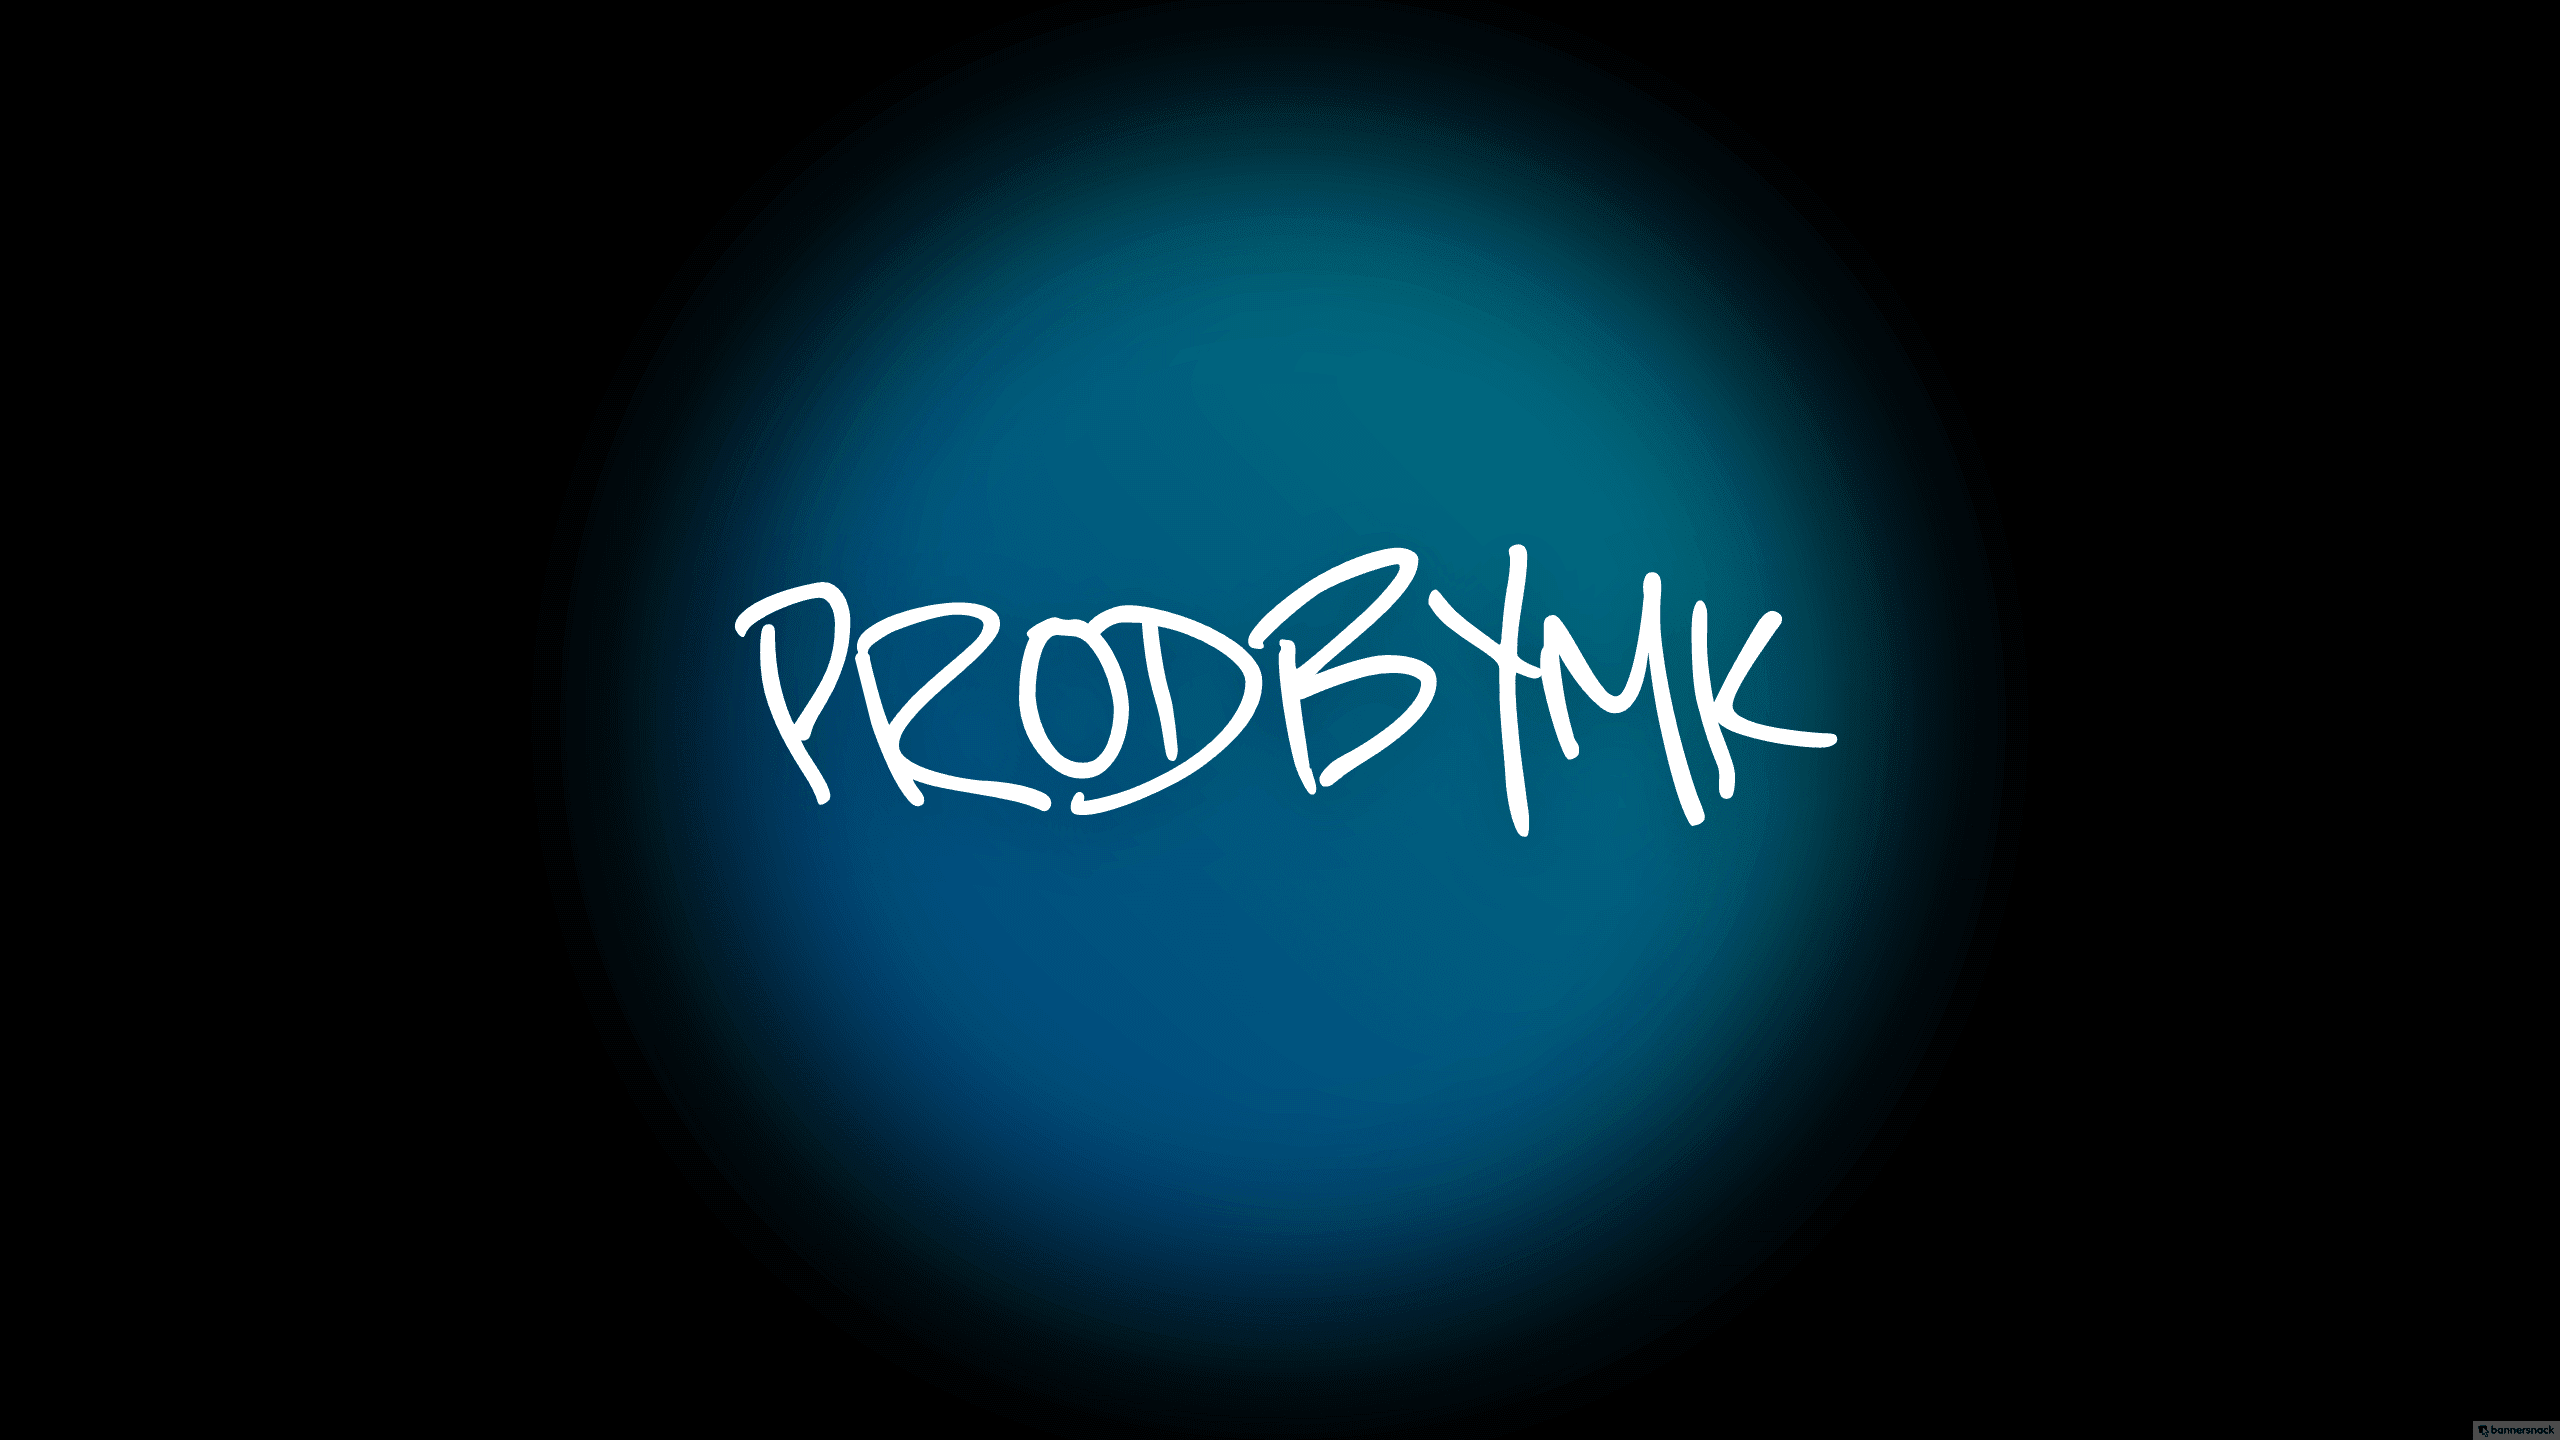 ProdByMK